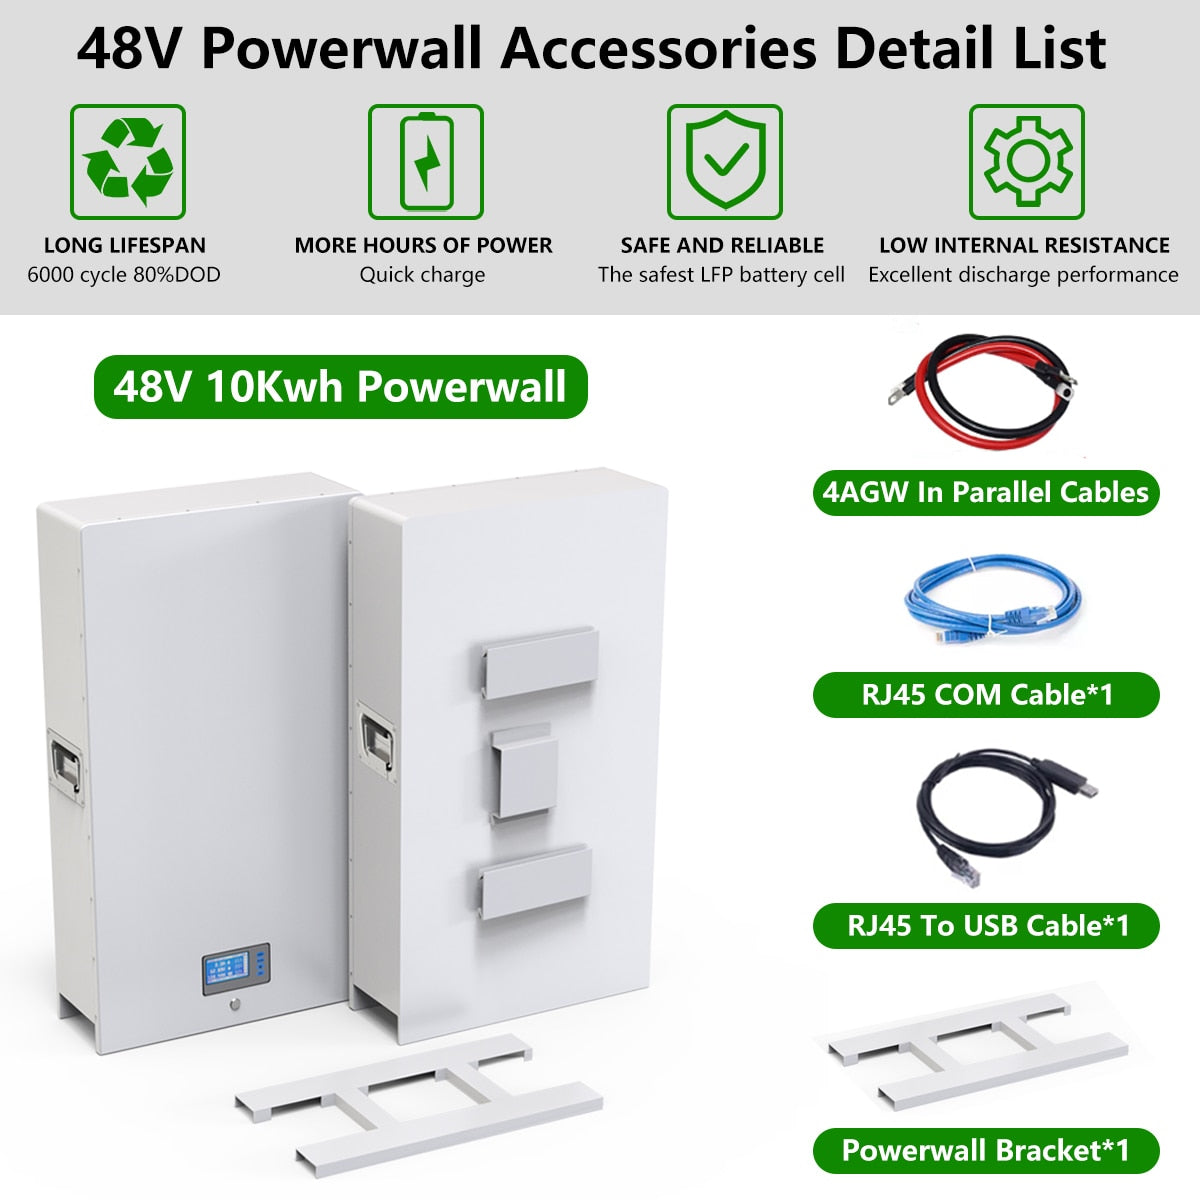 48V 200Ah 10Kw Powerwall, 48V Powerwall Accessories Detail List LONG LIFESPAN MORE